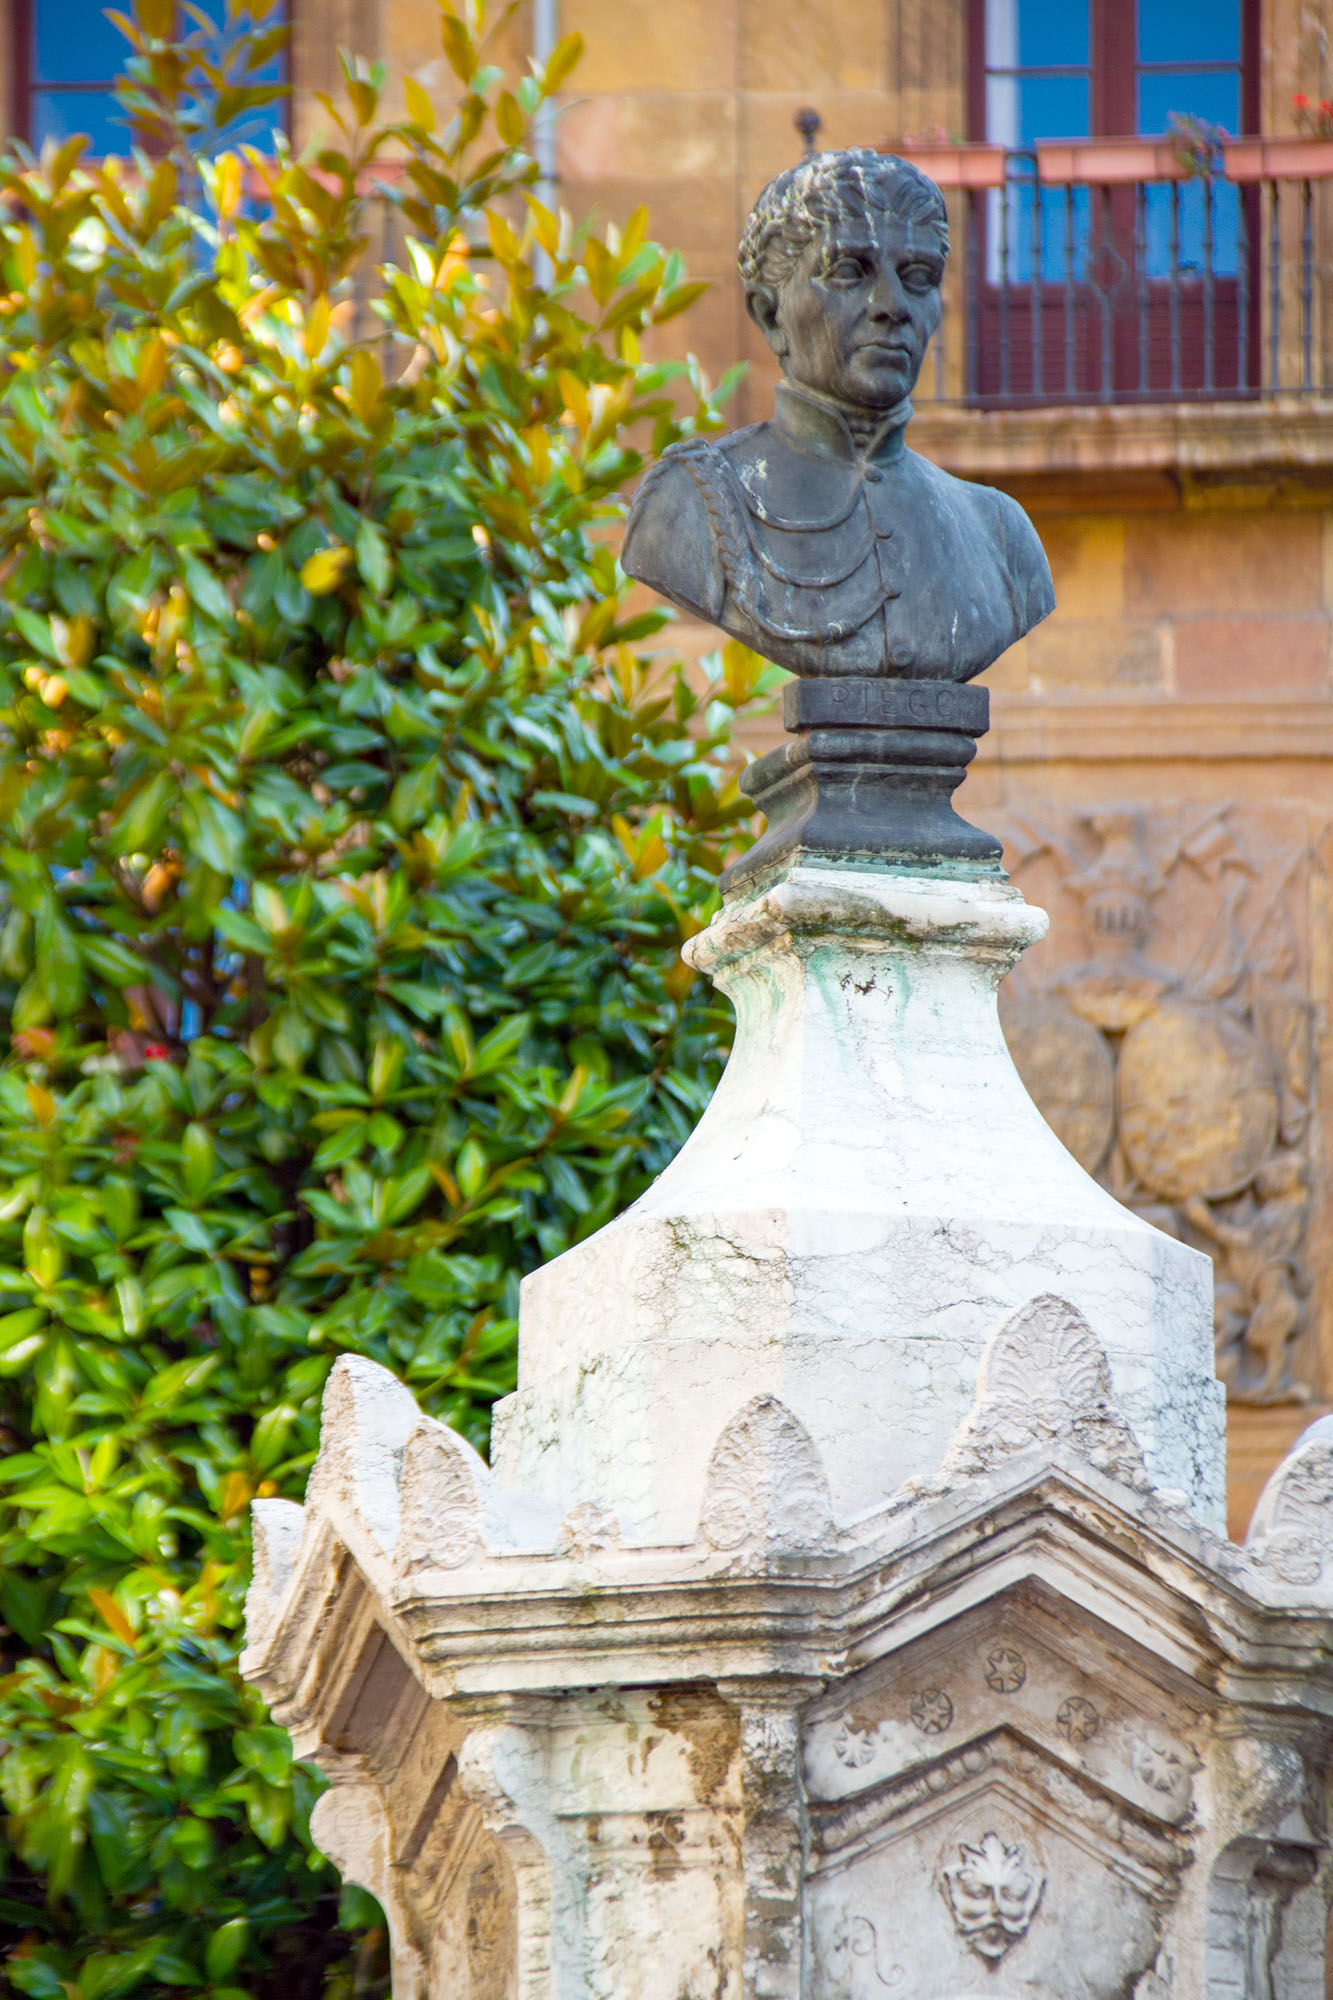 Riego Statue Oviedo, Asturias
